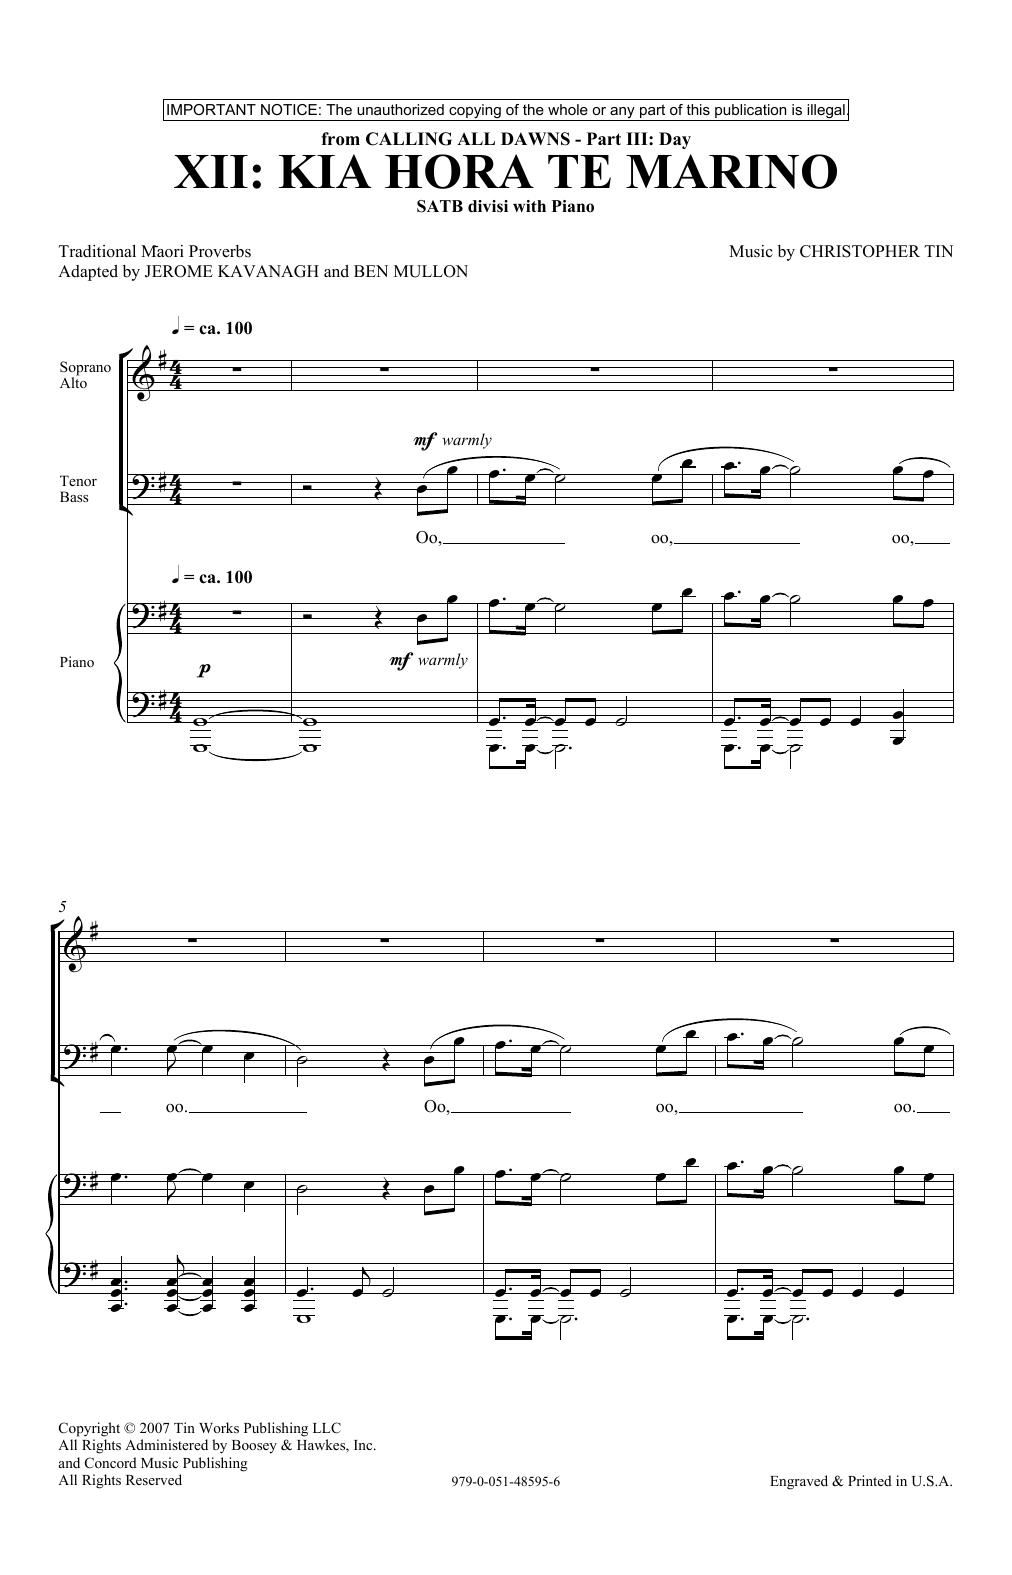 Christopher Tin Kia Hora Te Marino Sheet Music Notes & Chords for Choir - Download or Print PDF